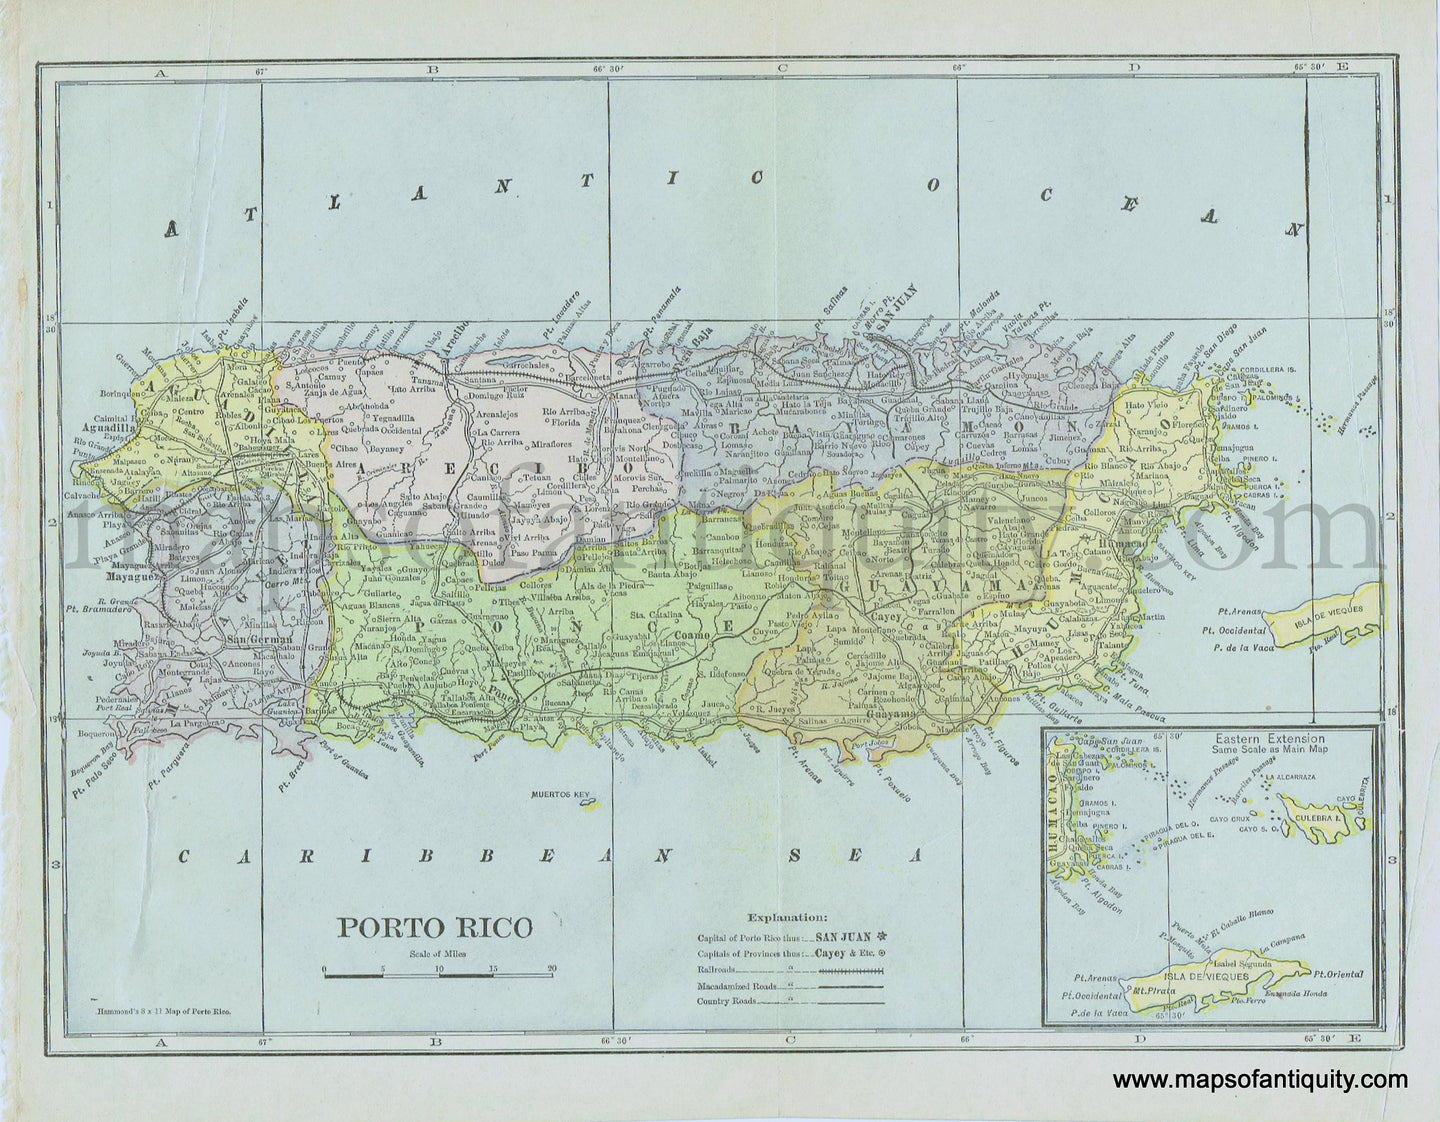 Antique-Printed-Color-Map-Puerto-Rico-Porto-Rico-Hammond-Caribbean-1800s-19th-century-Maps-of-Antiquity